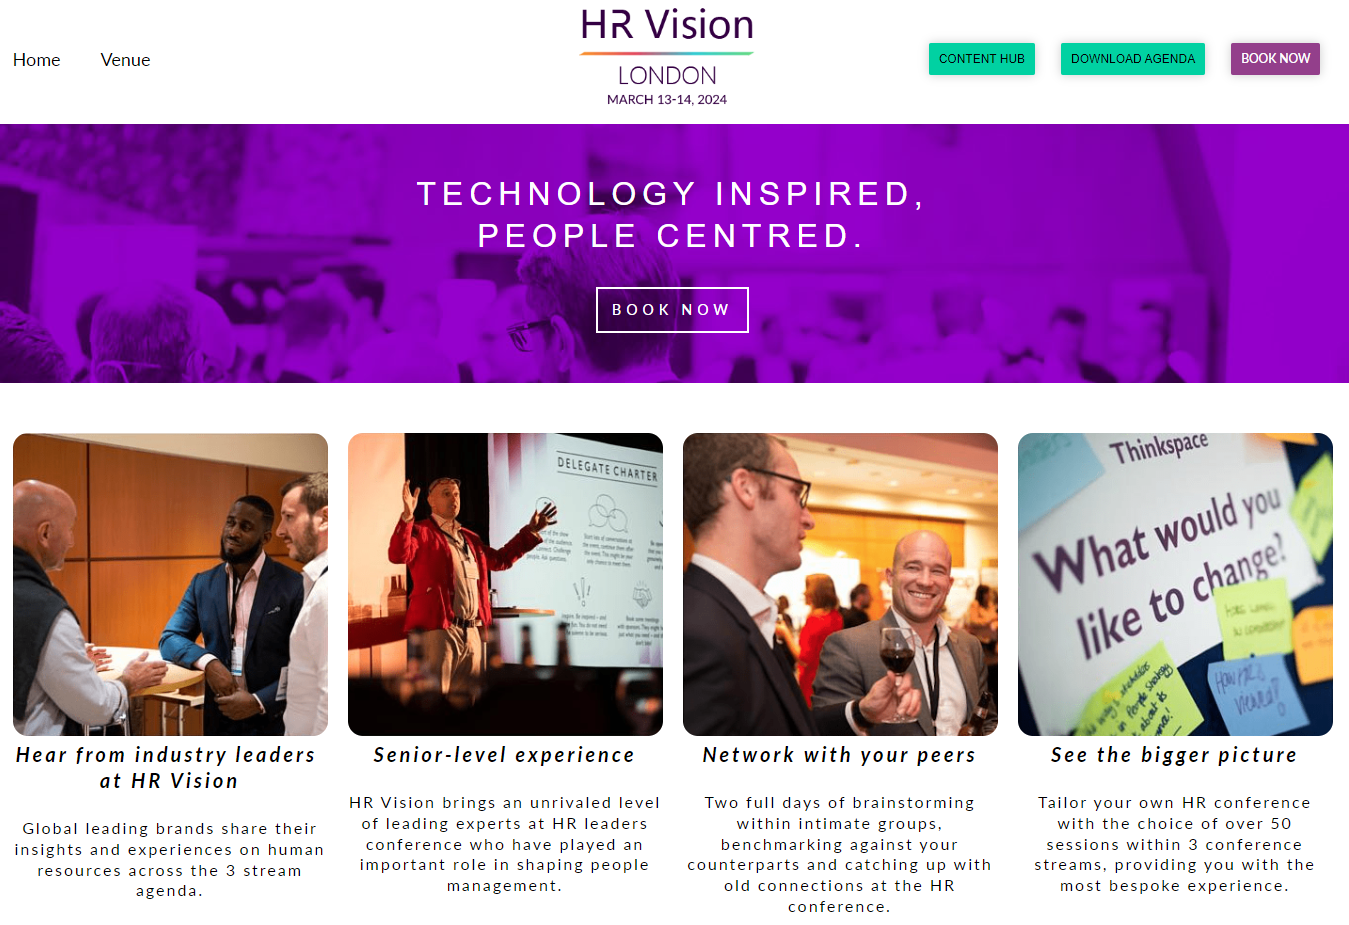 HR Vision, London conference